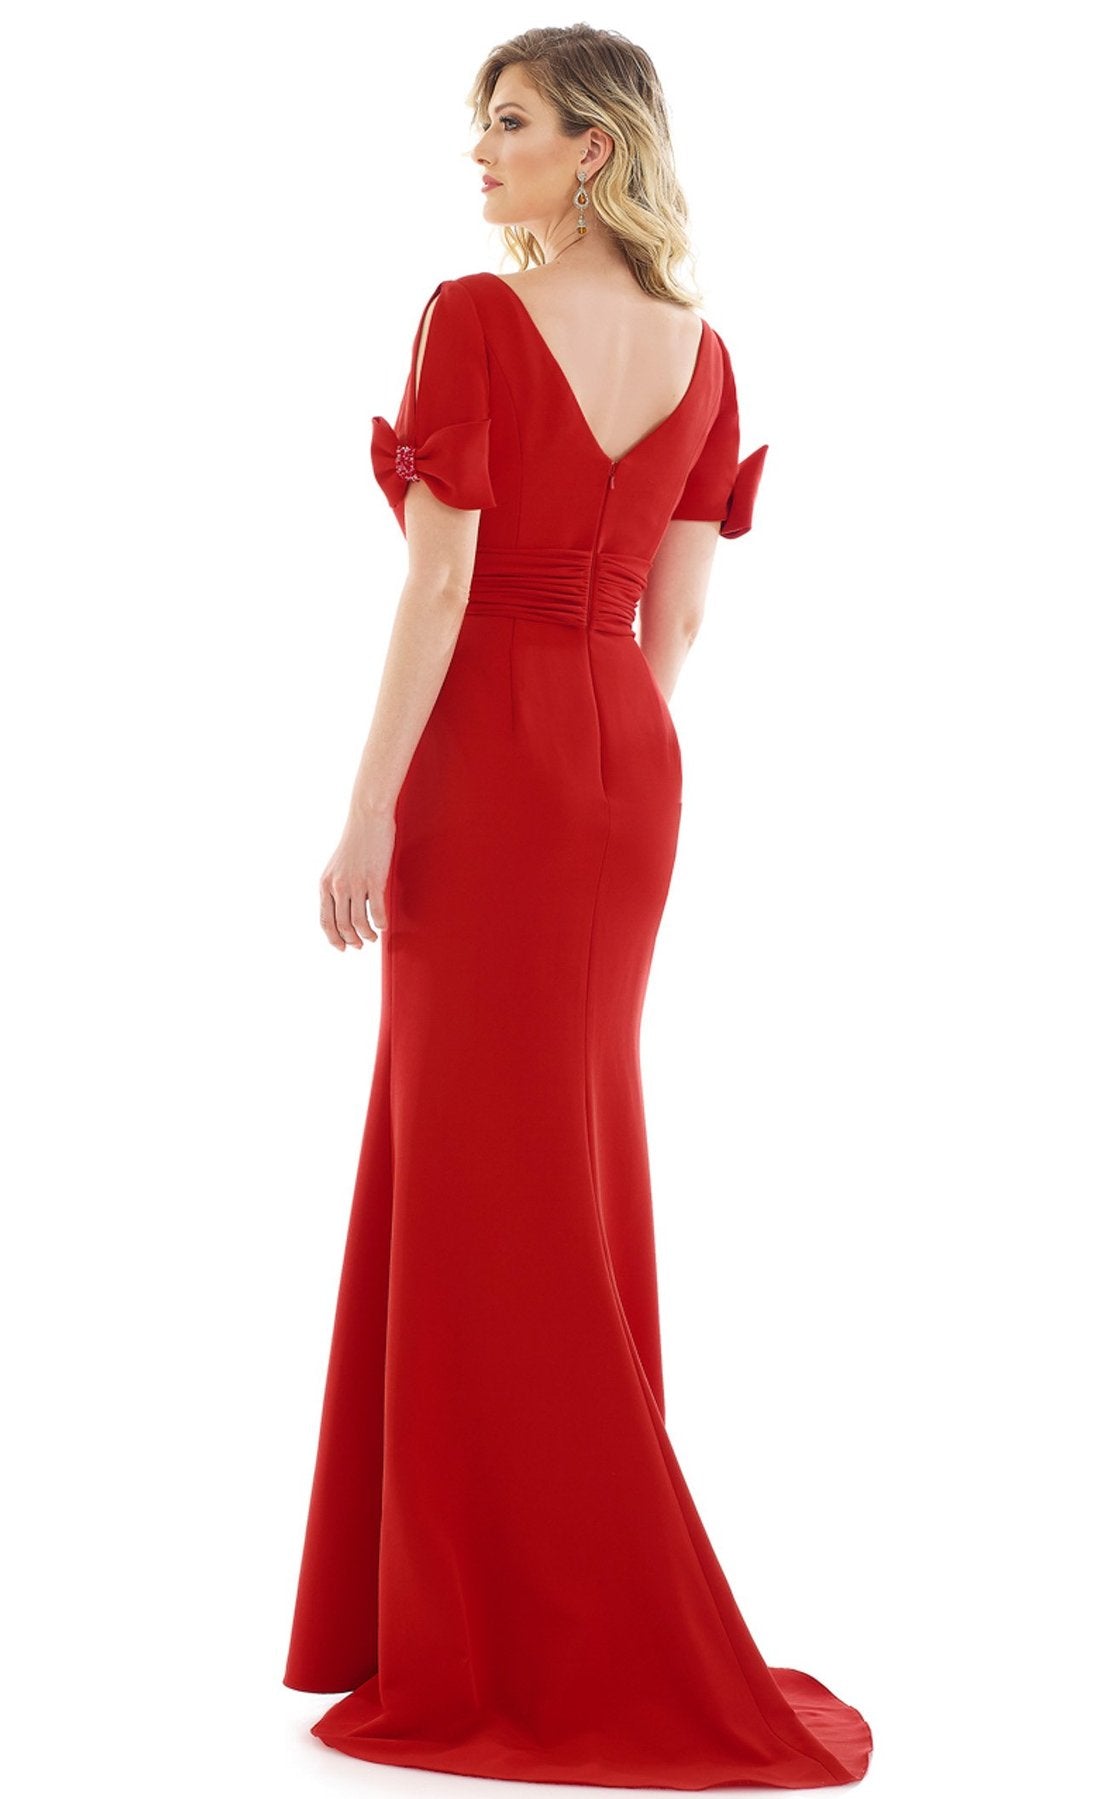 Feriani Couture GIA FRANCO 12989 DRESS